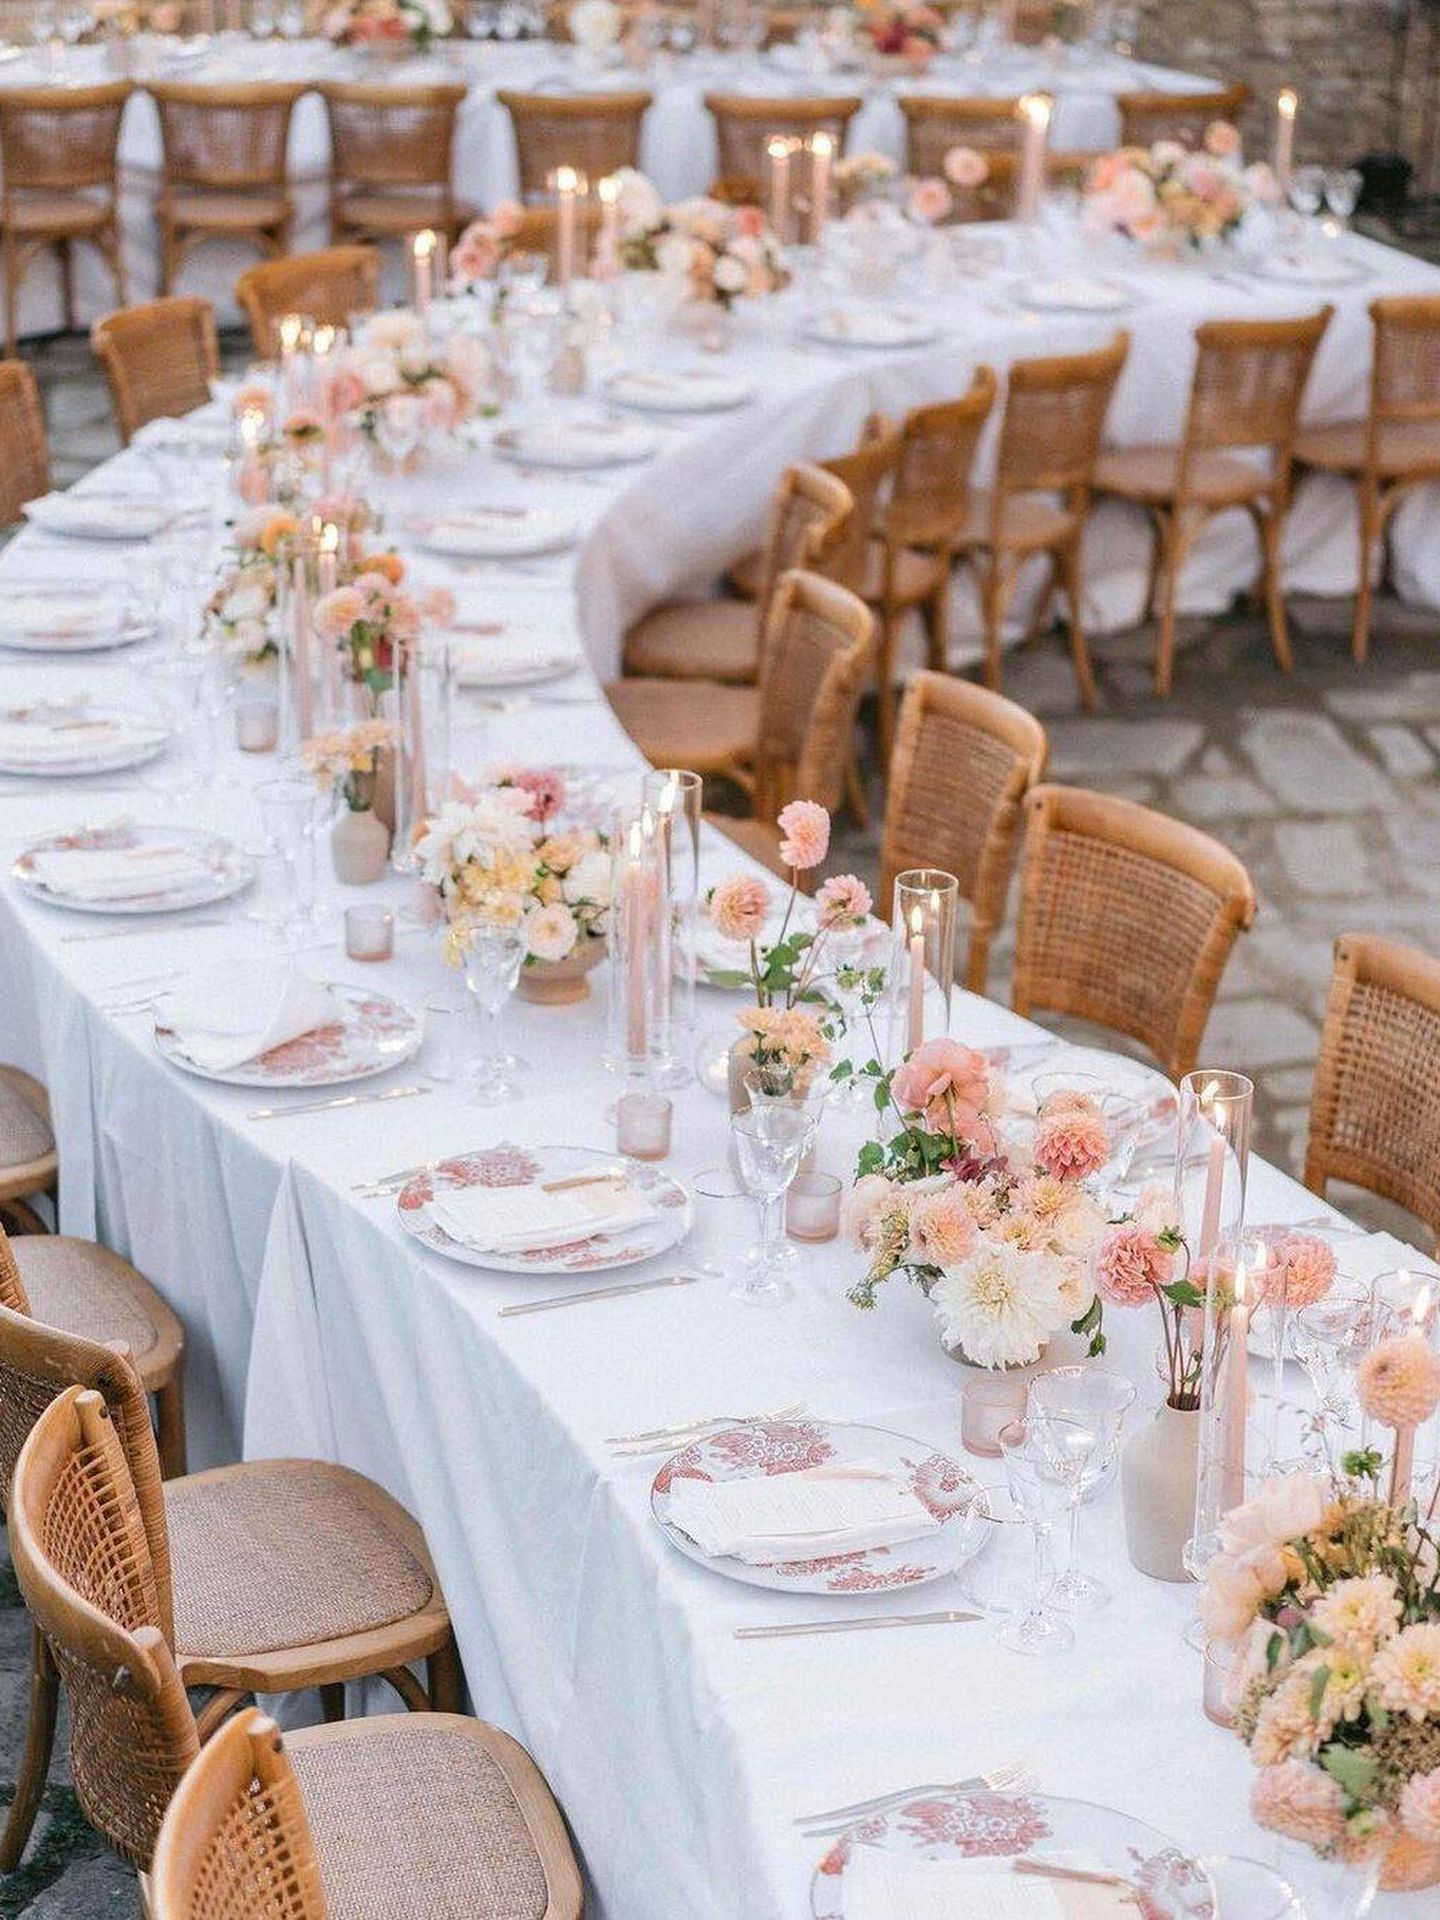 Una mesa de verano. (Instagram/ @velvetisinlove)